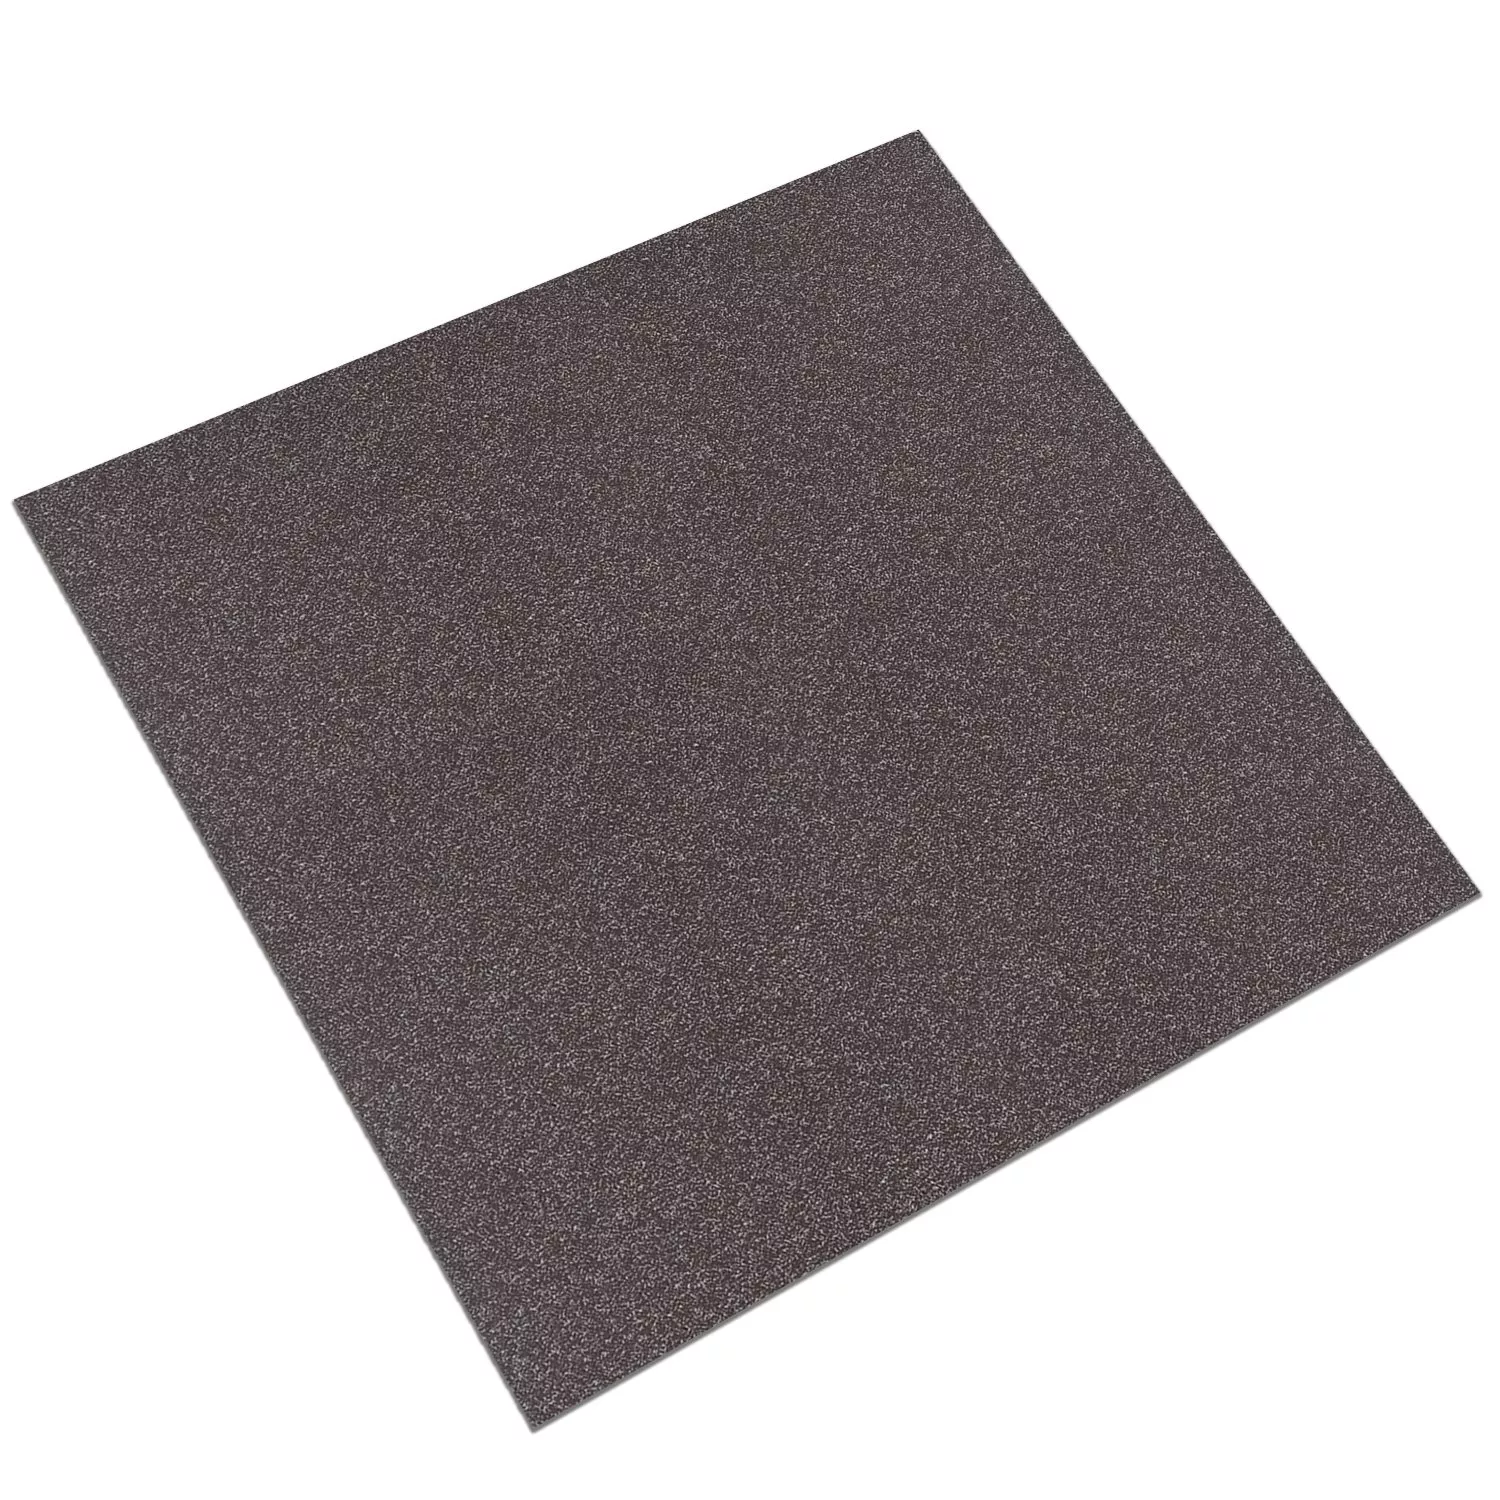 Sample Floor Tiles Courage Fine Grain R10/A Anthracite 30x30cm